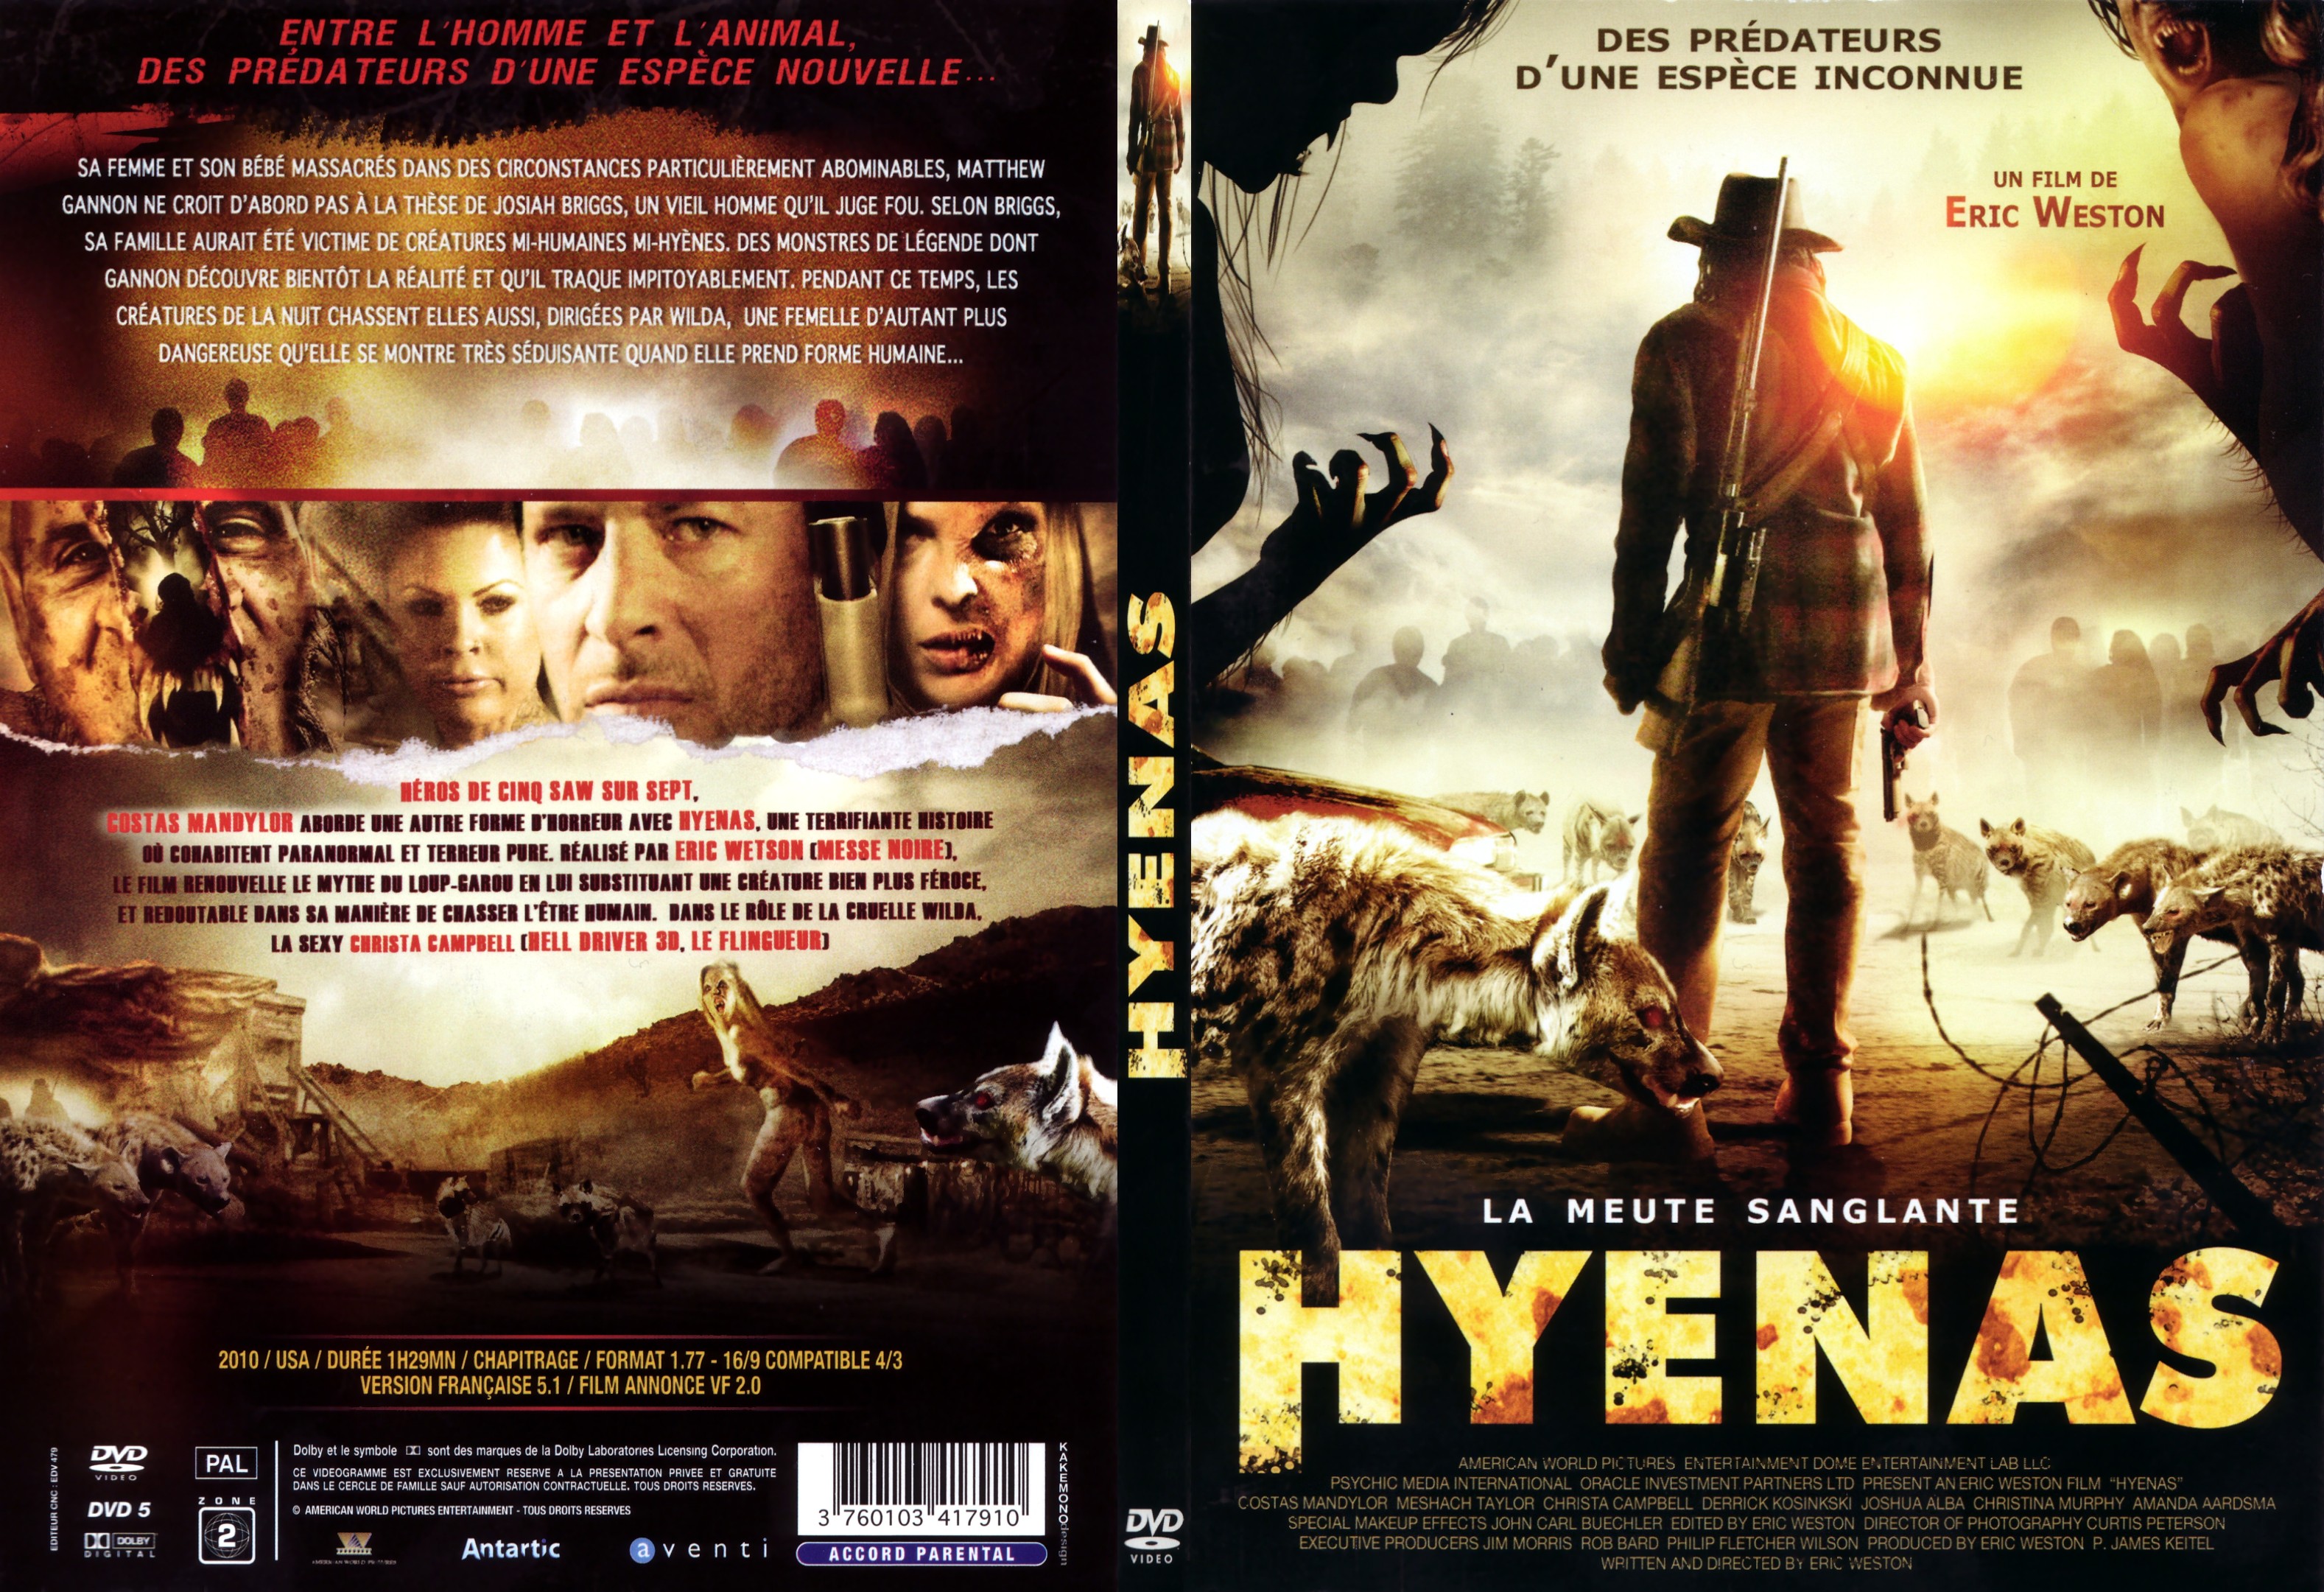 Jaquette DVD Hyenas - SLIM